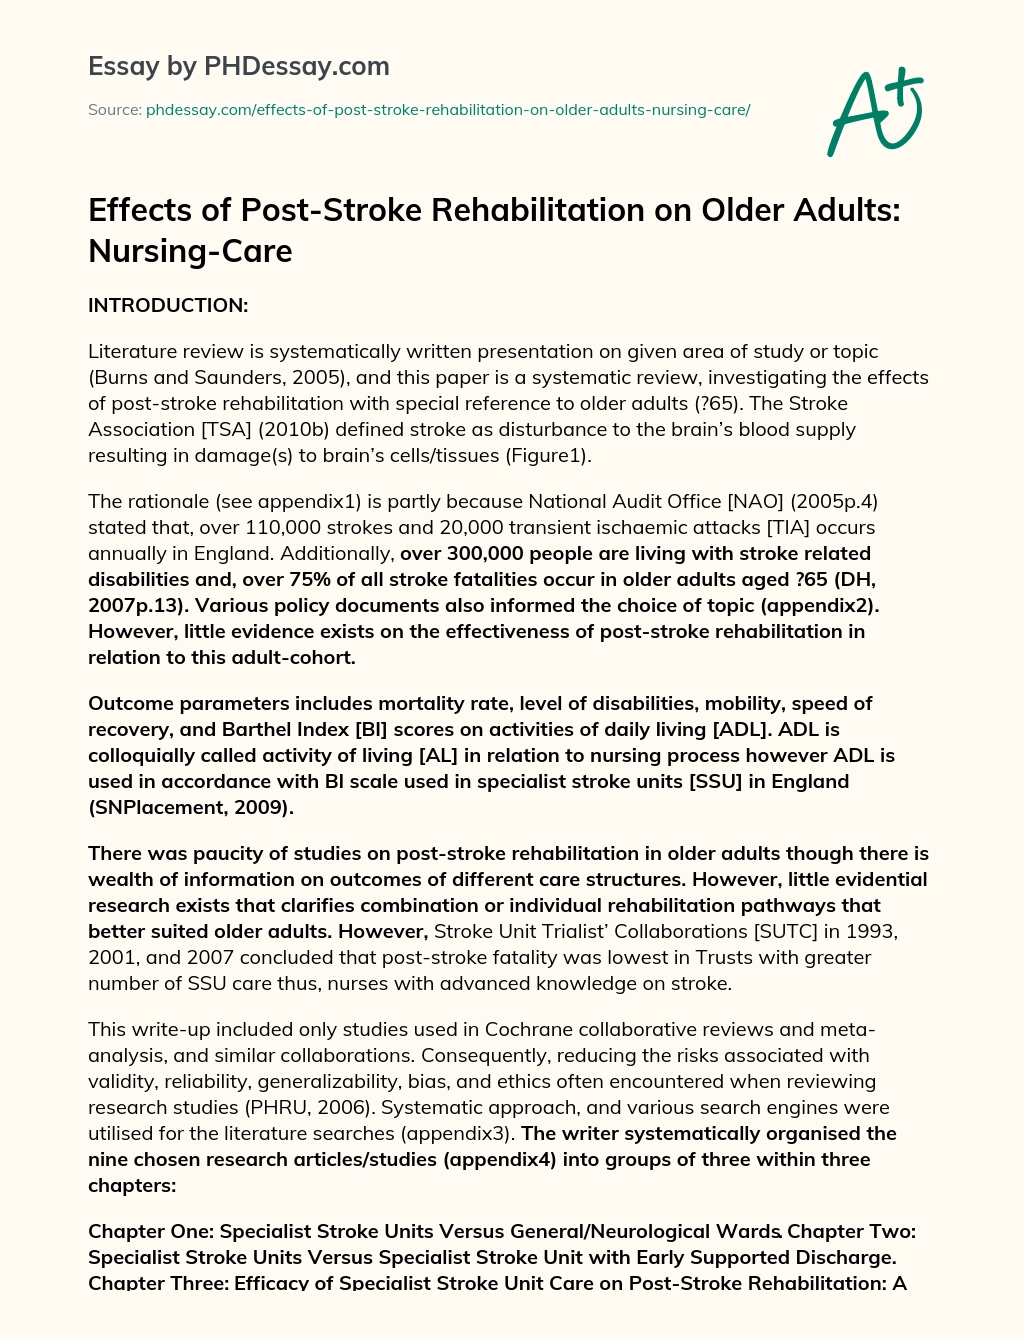 Effects of Post-Stroke Rehabilitation on Older Adults: Nursing-Care essay